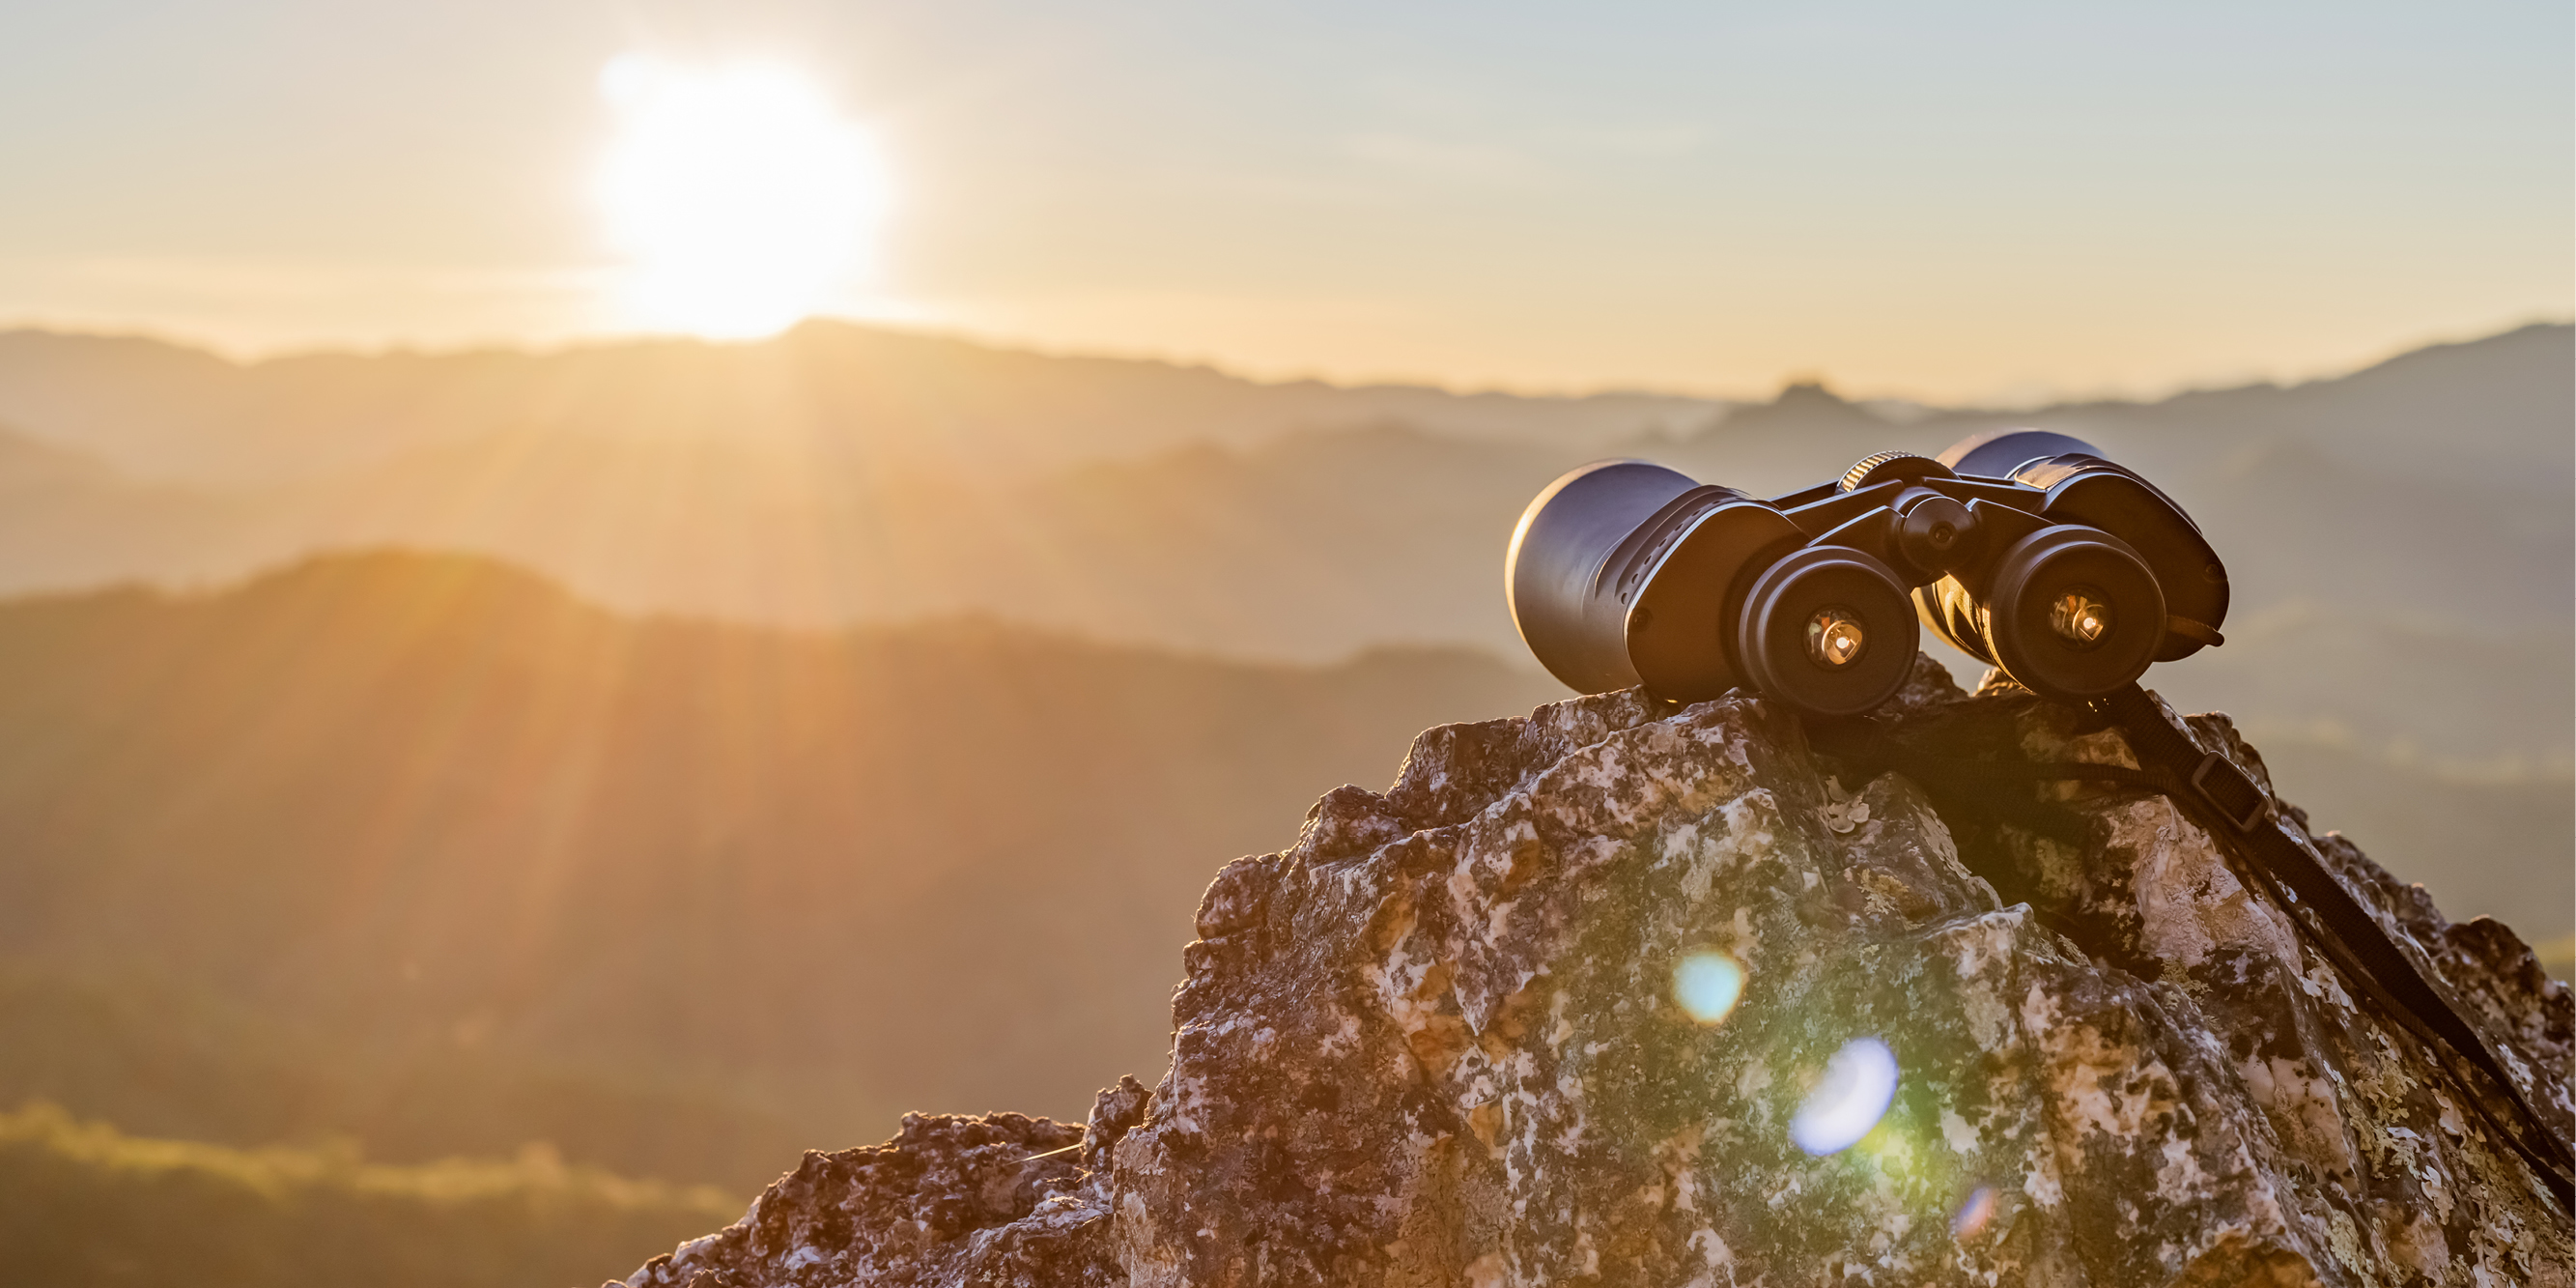 Binoculars on a rock at sunset